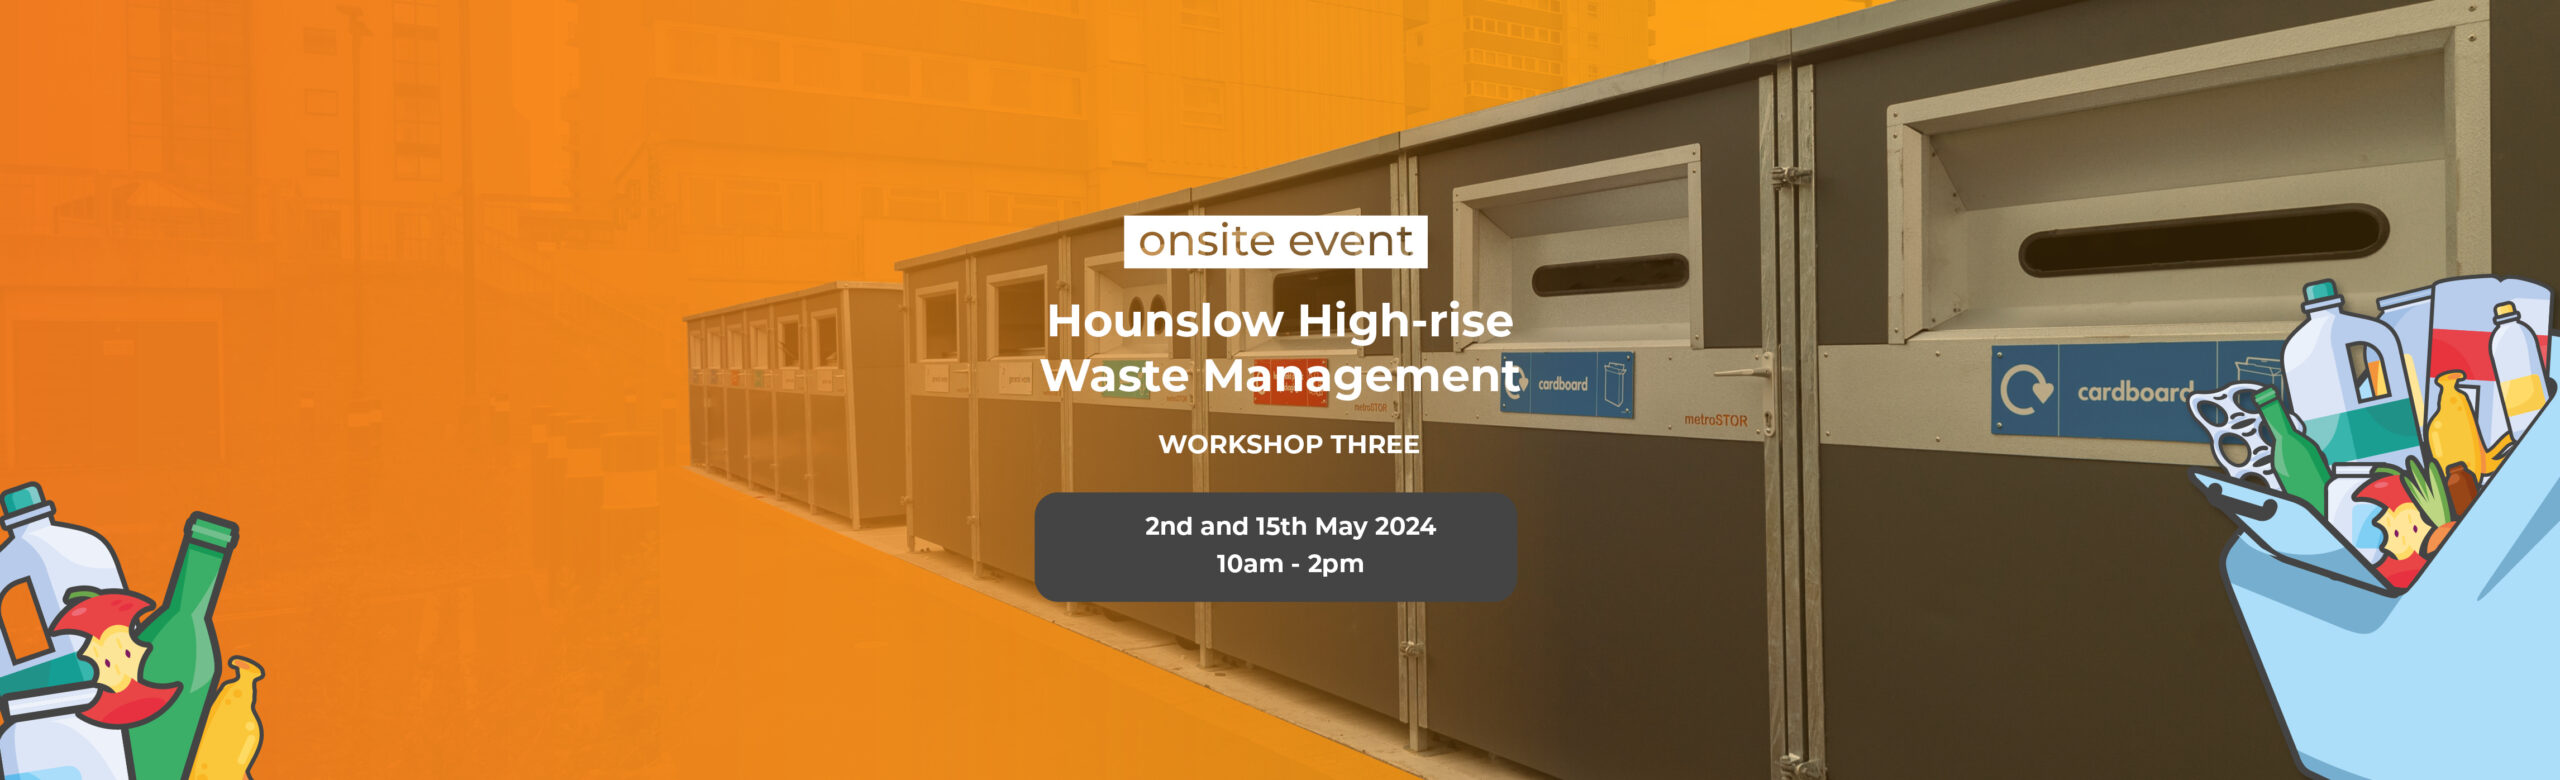 Hounslow High-rise Waste Management Workshop